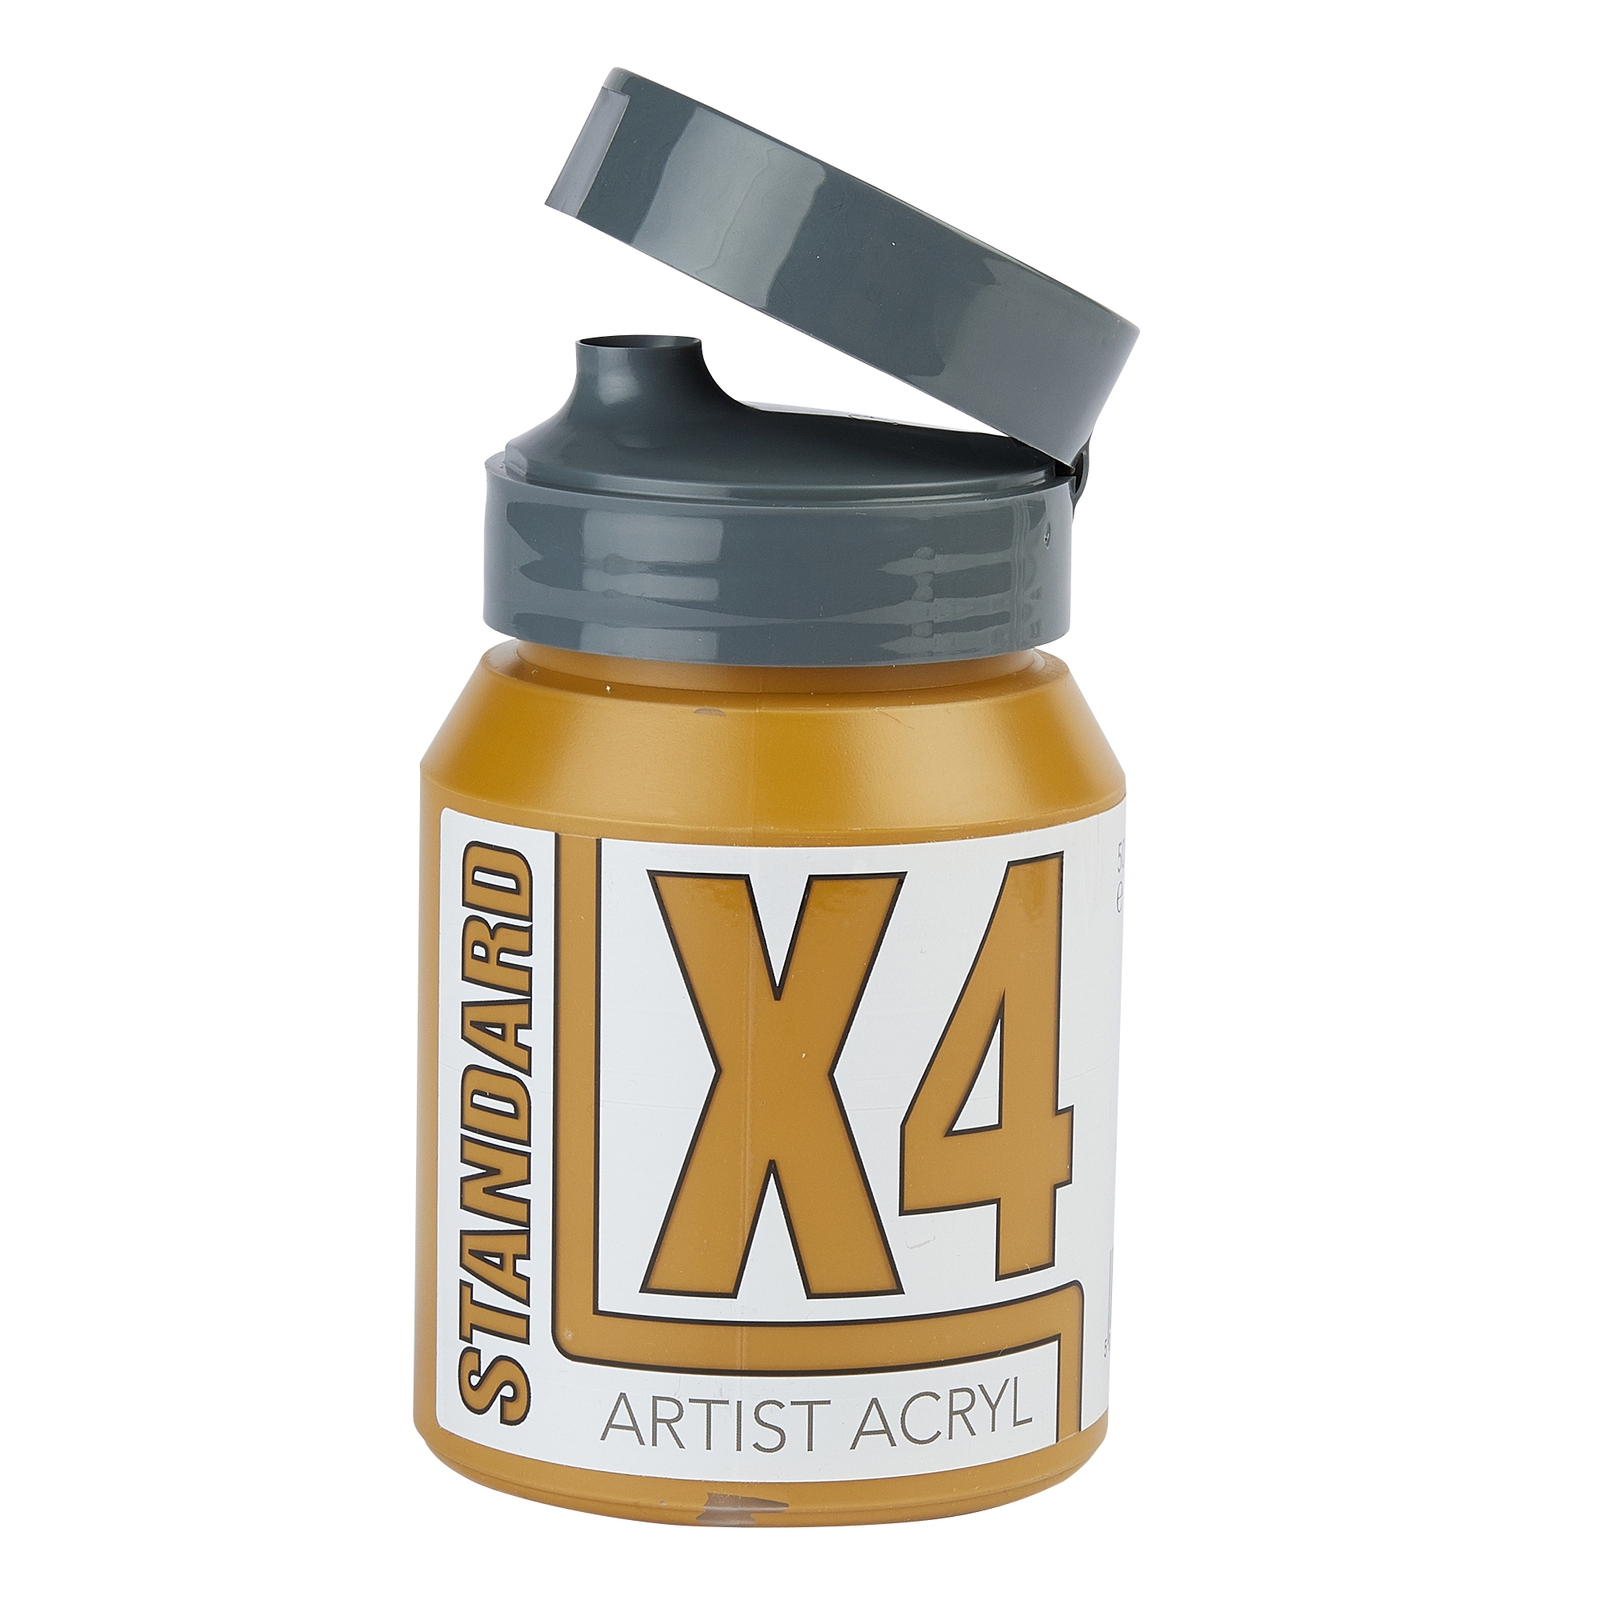 Specialist Crafts X4 Standard Raw Sienna Acryl/Acrylic Paint - 500ml - Each